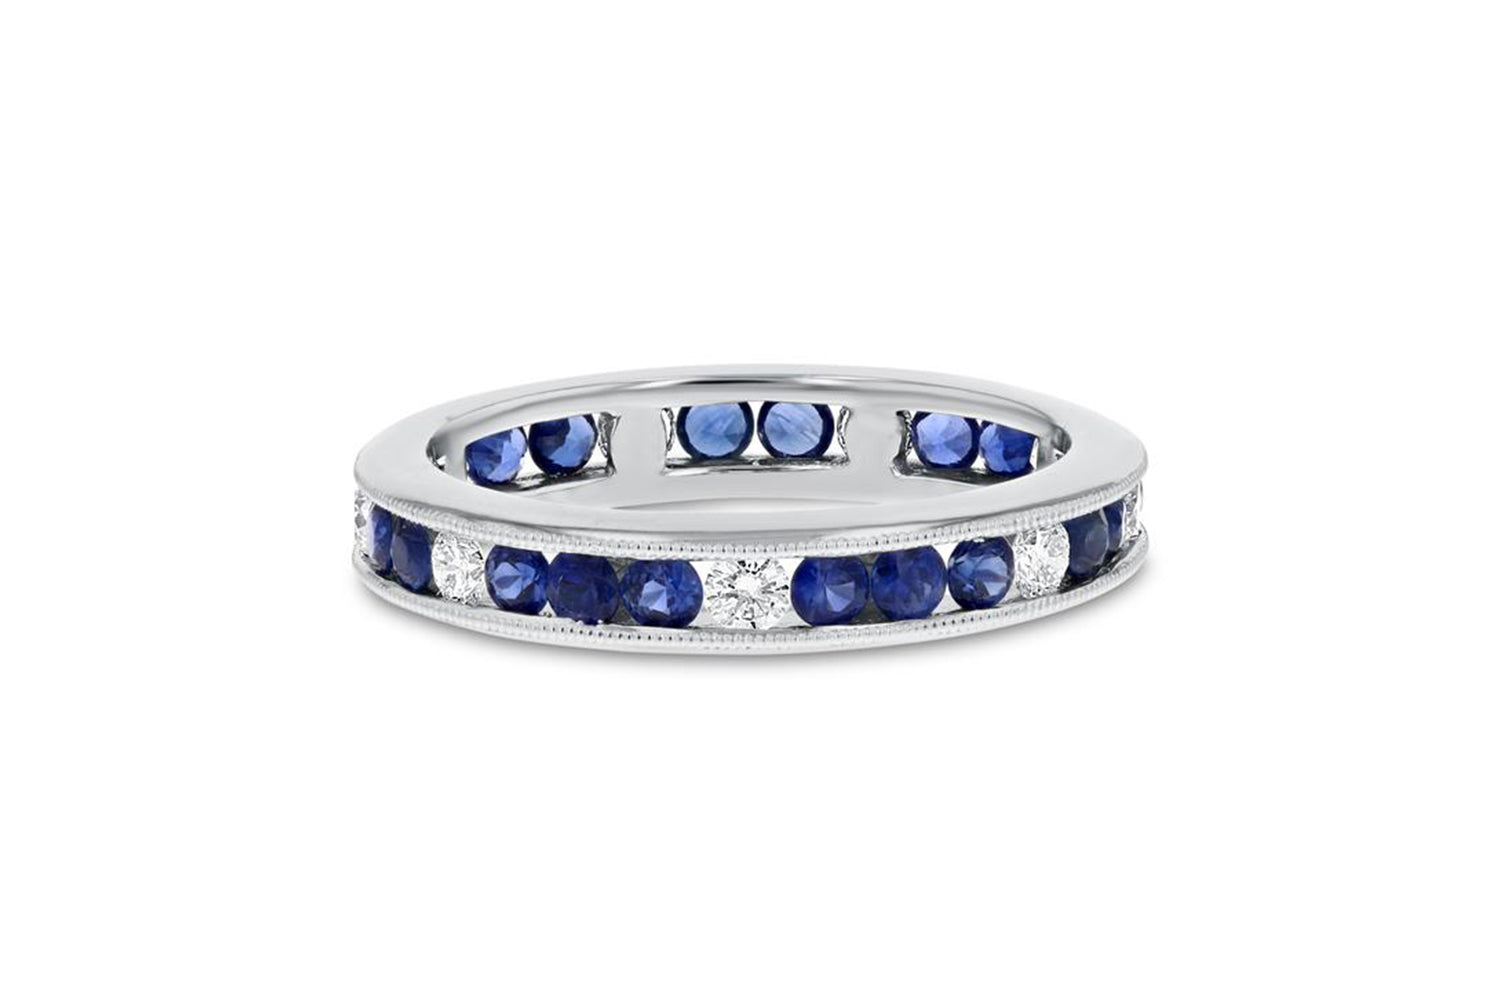 18K White Gold Diamond & Sapphire Ring, 1.36 Carats